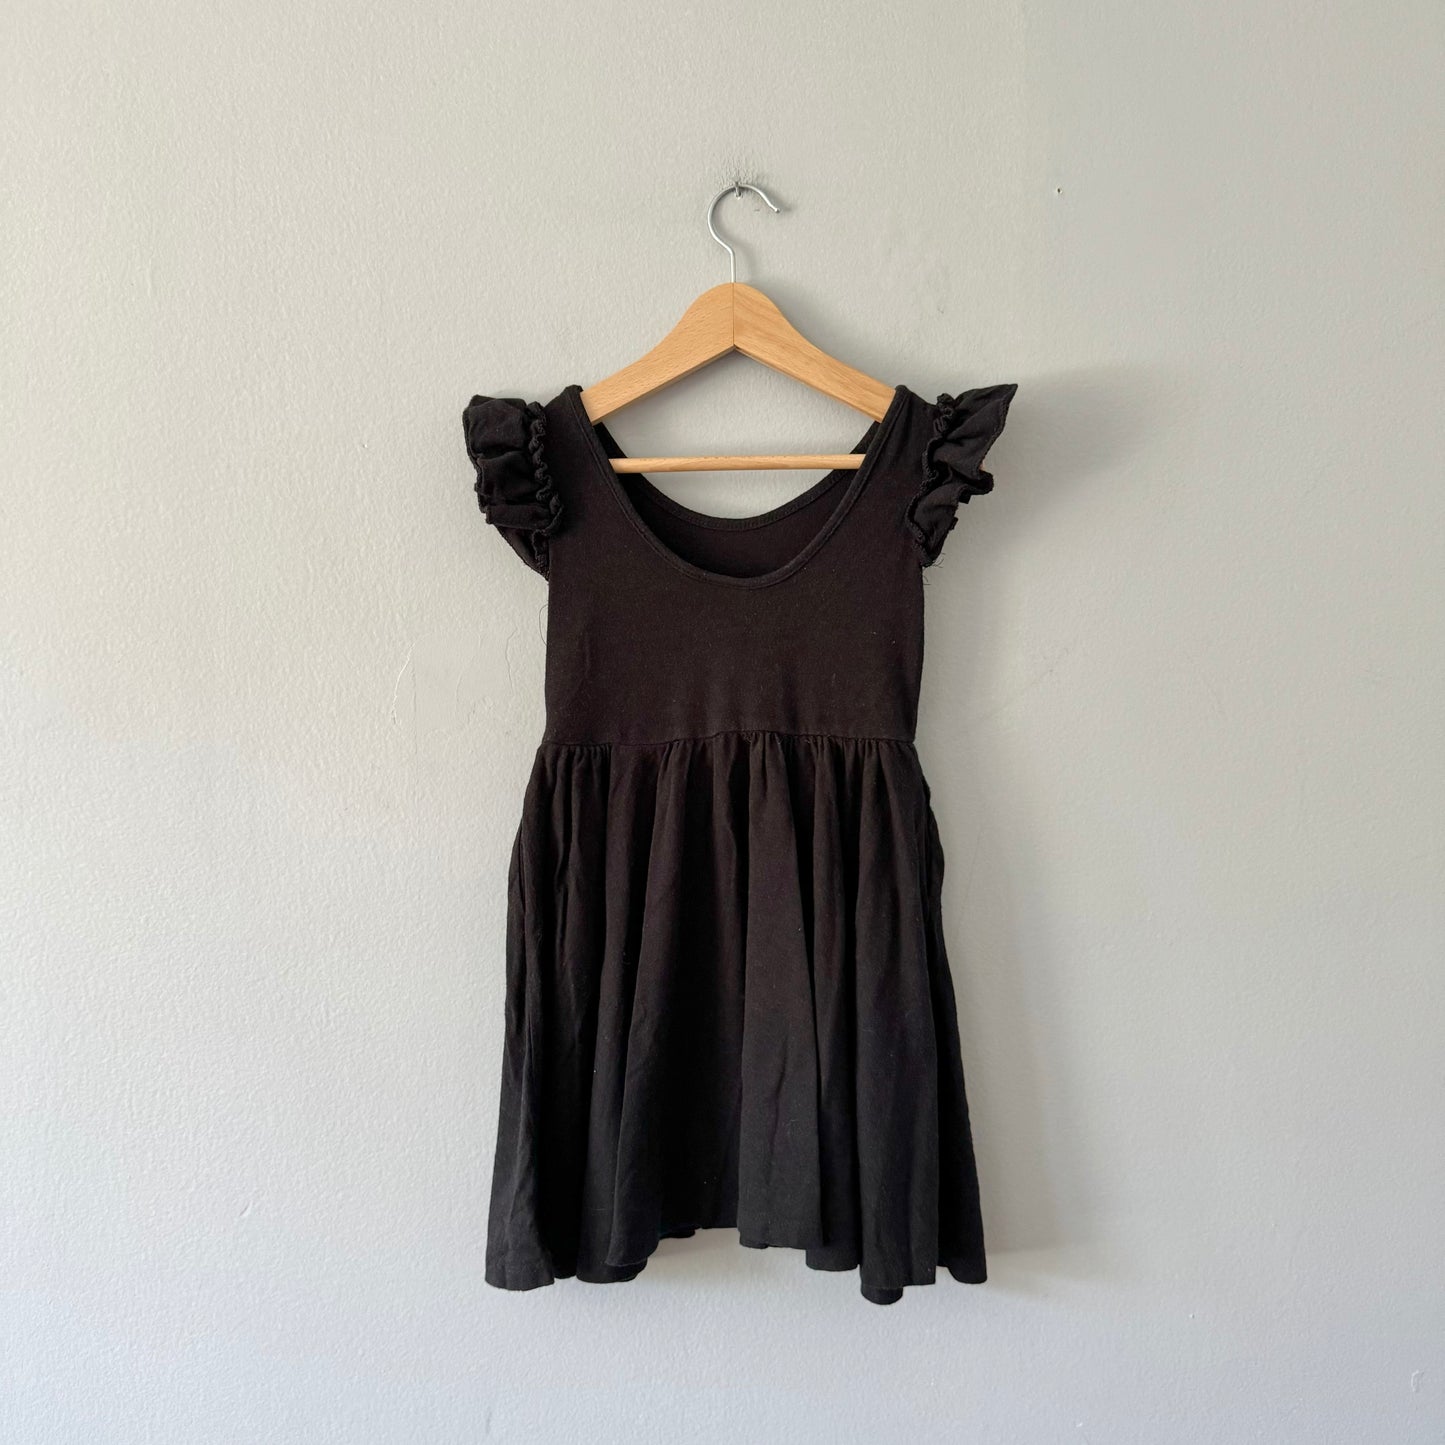 The Whimsical Fox / Black dress - bamboo rayon / 4T